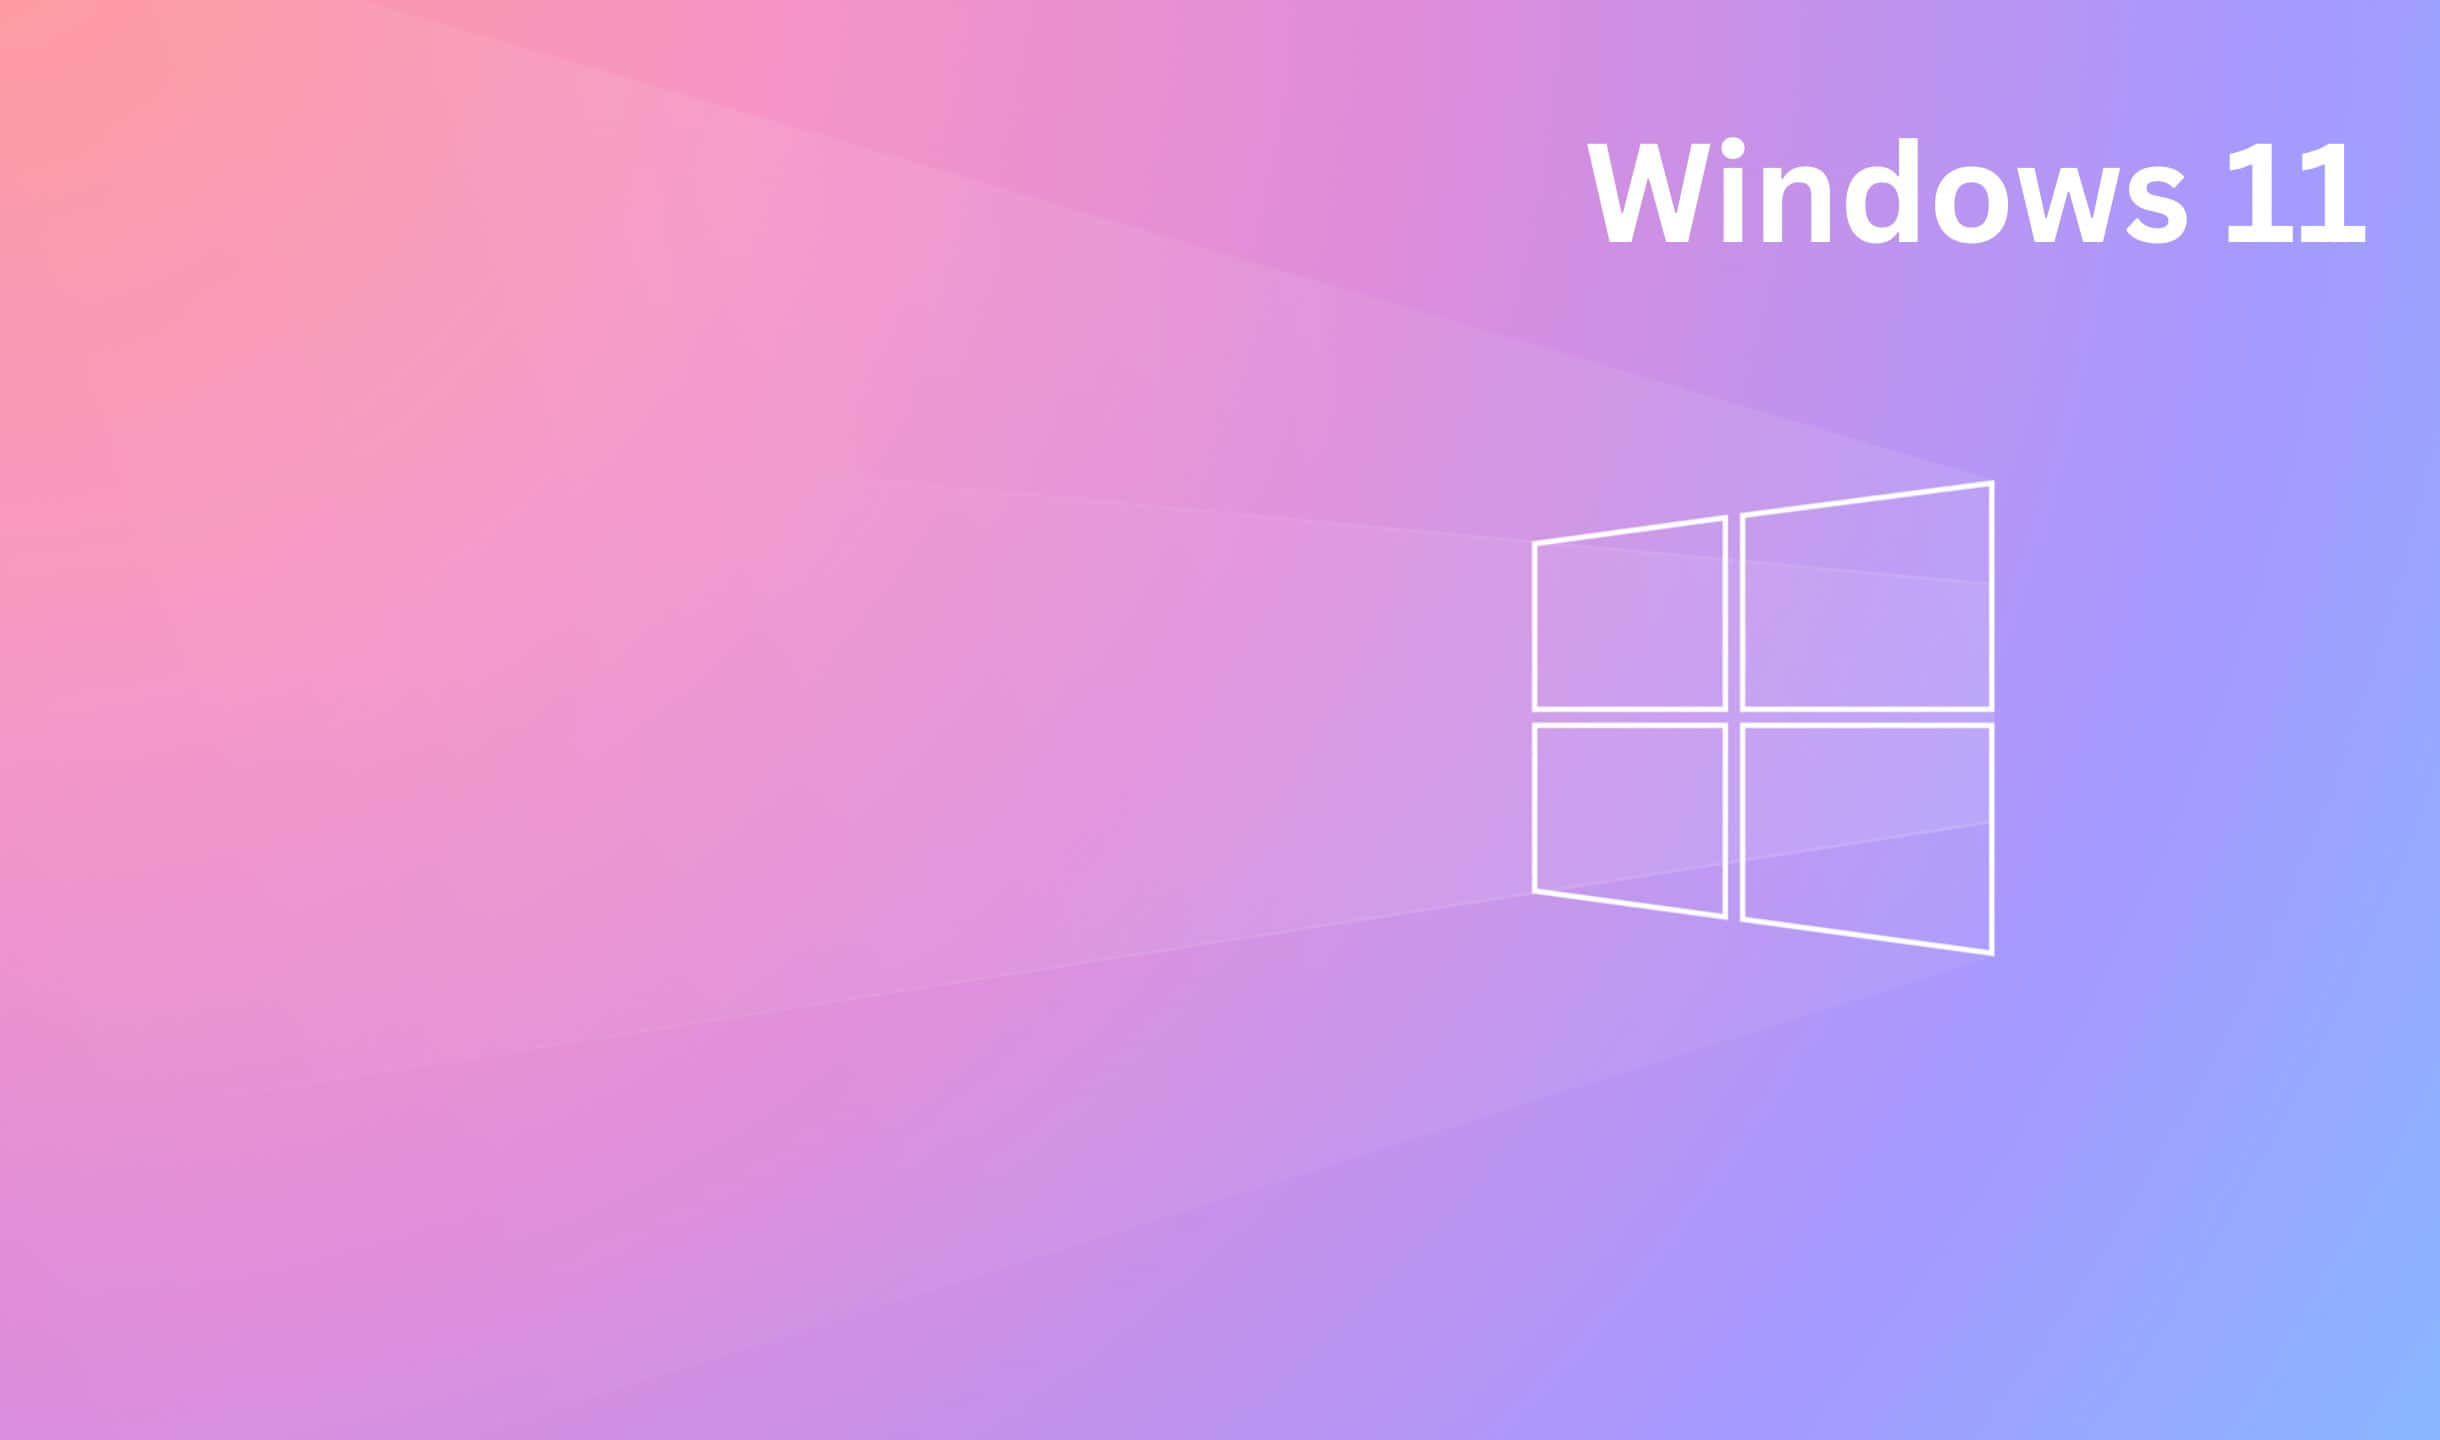 Blivklar Til Fremtiden Med Teknologien Med Windows 11.